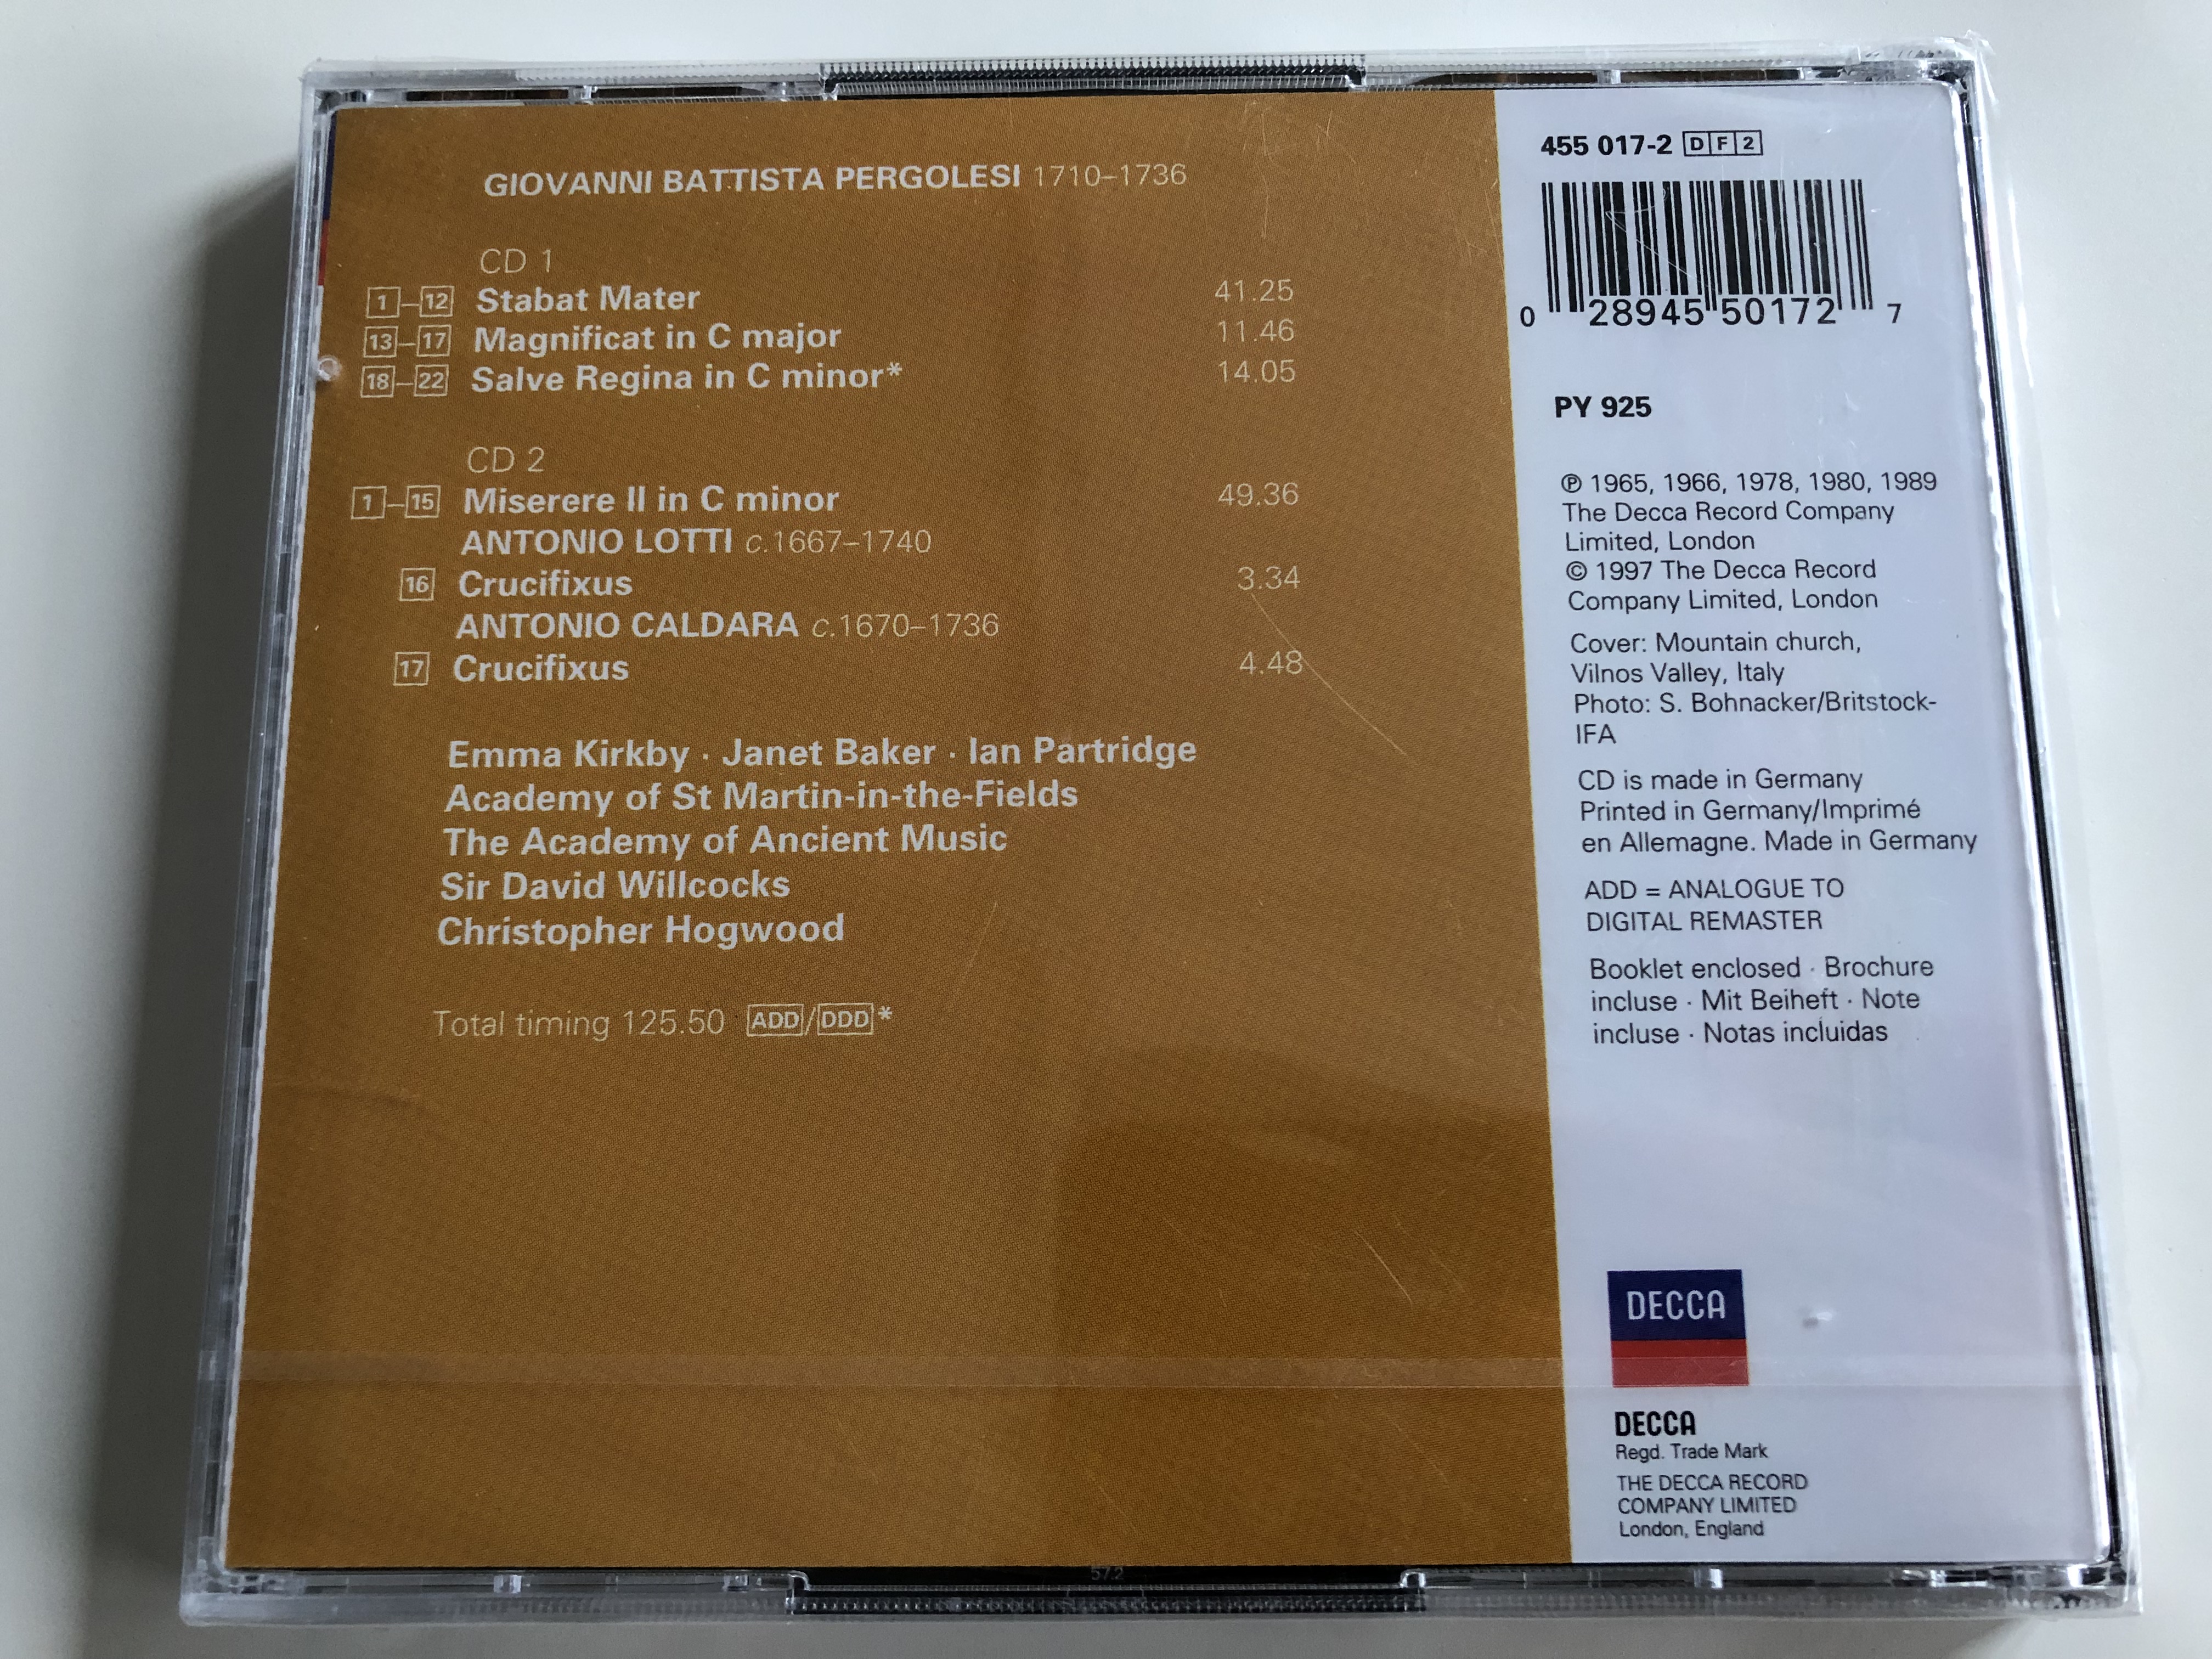 Musica Sacra / Pergolesi: Stabat Mater, Misere II, Salve Regina, Magnificat  / Lotti: Crufixus / Caldara: Lotta: / Caldara: Crufixus / Decca ‎2x Audio  CD 1997 / 455 017-2 - bibleinmylanguage